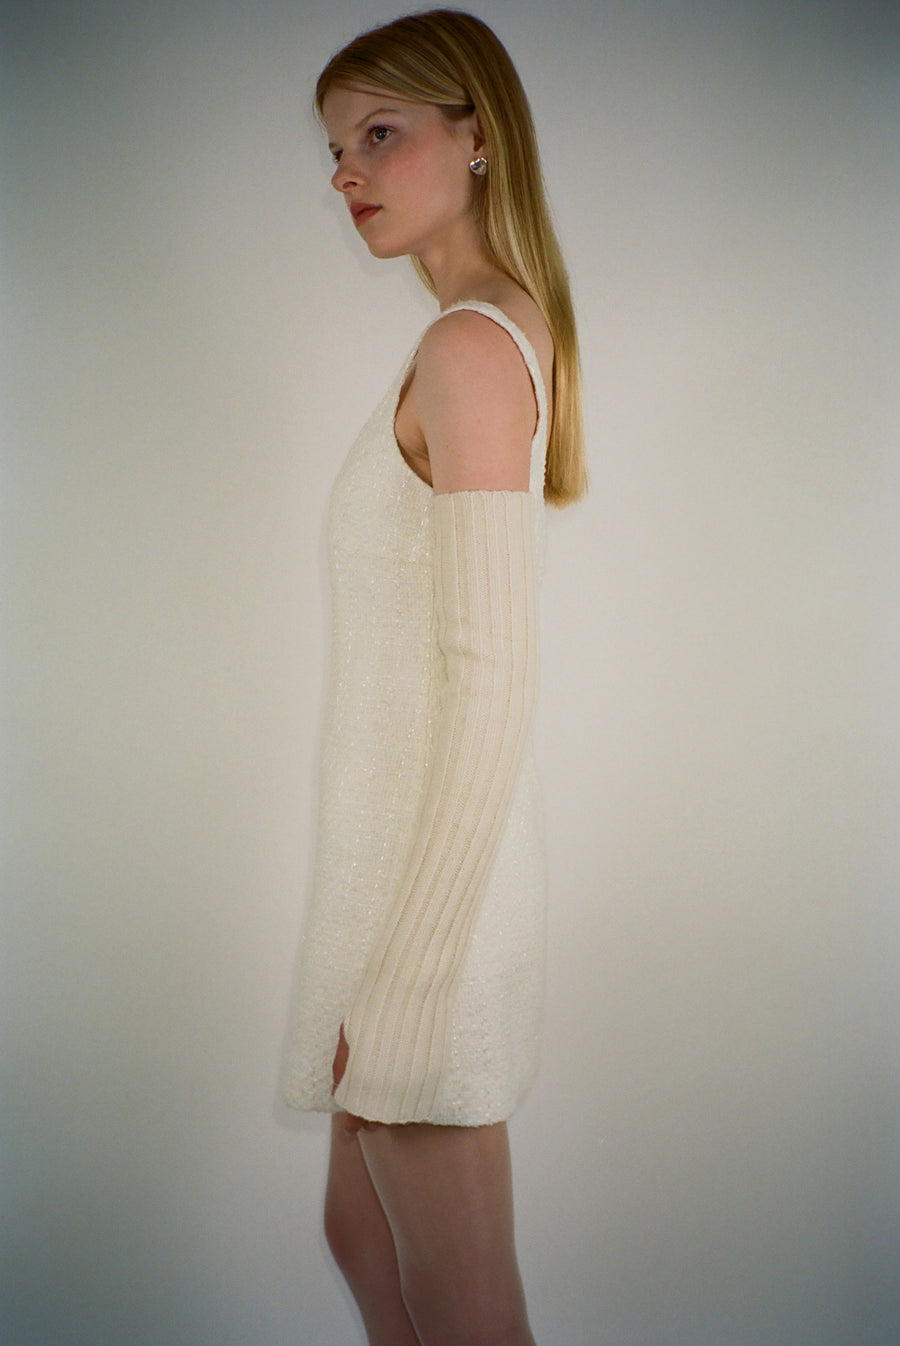 Sleeveless mini dress in off white tweed on model